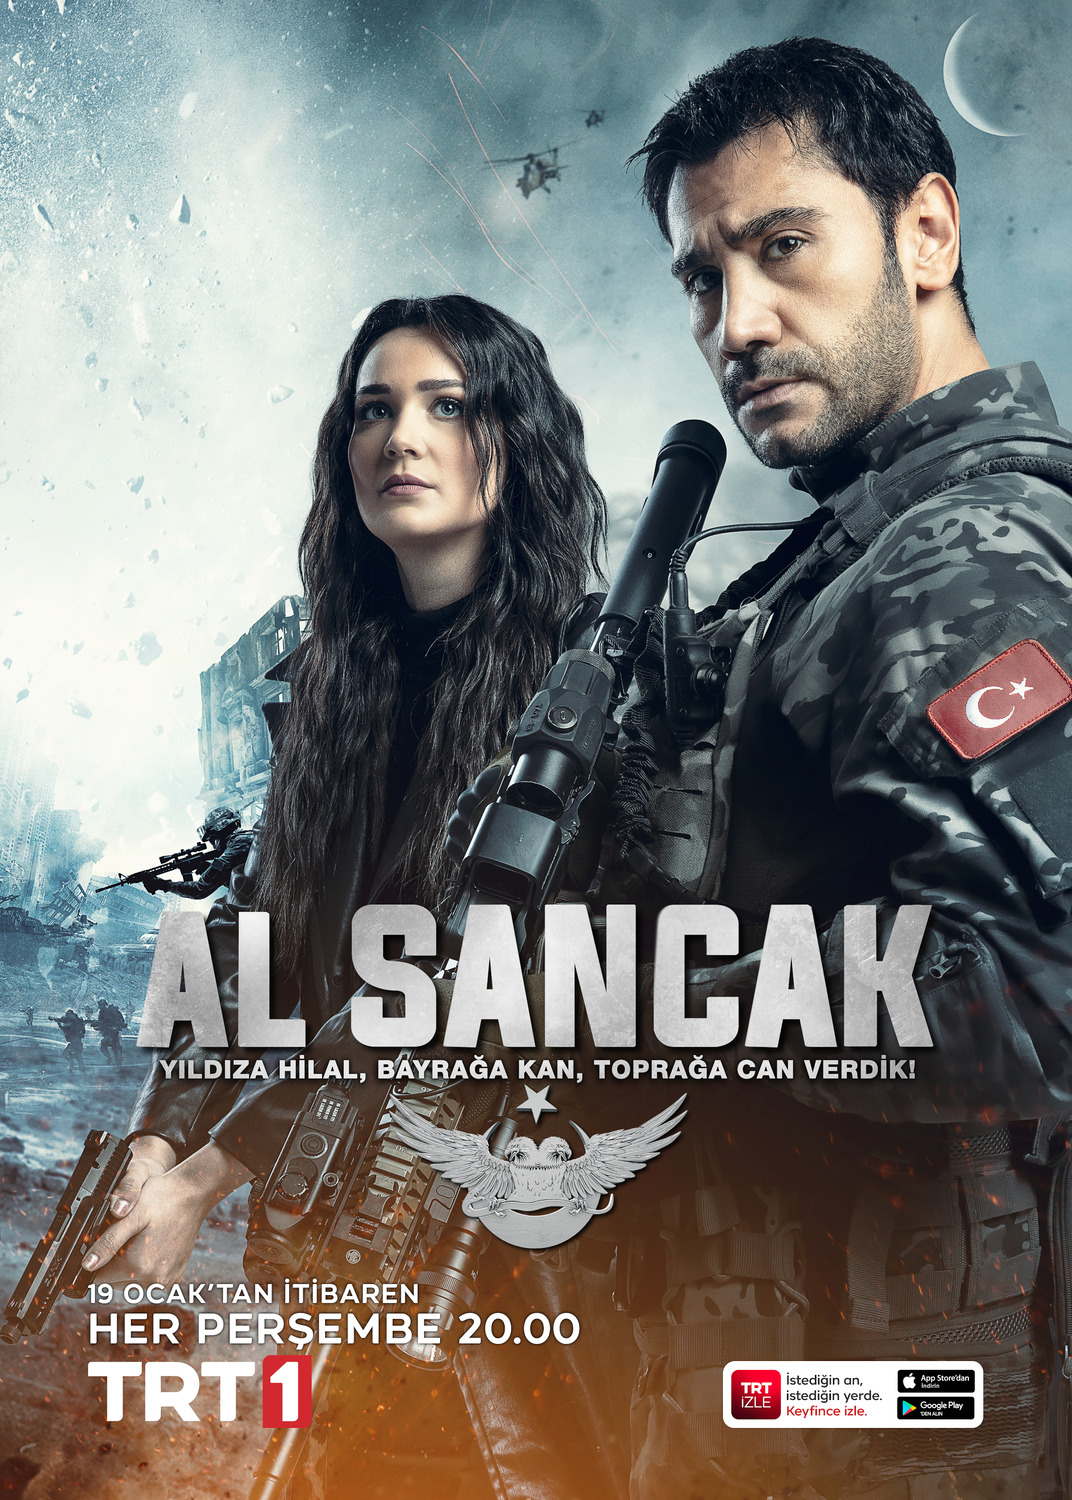 Extra Large TV Poster Image for Al Sancak (#4 of 20)